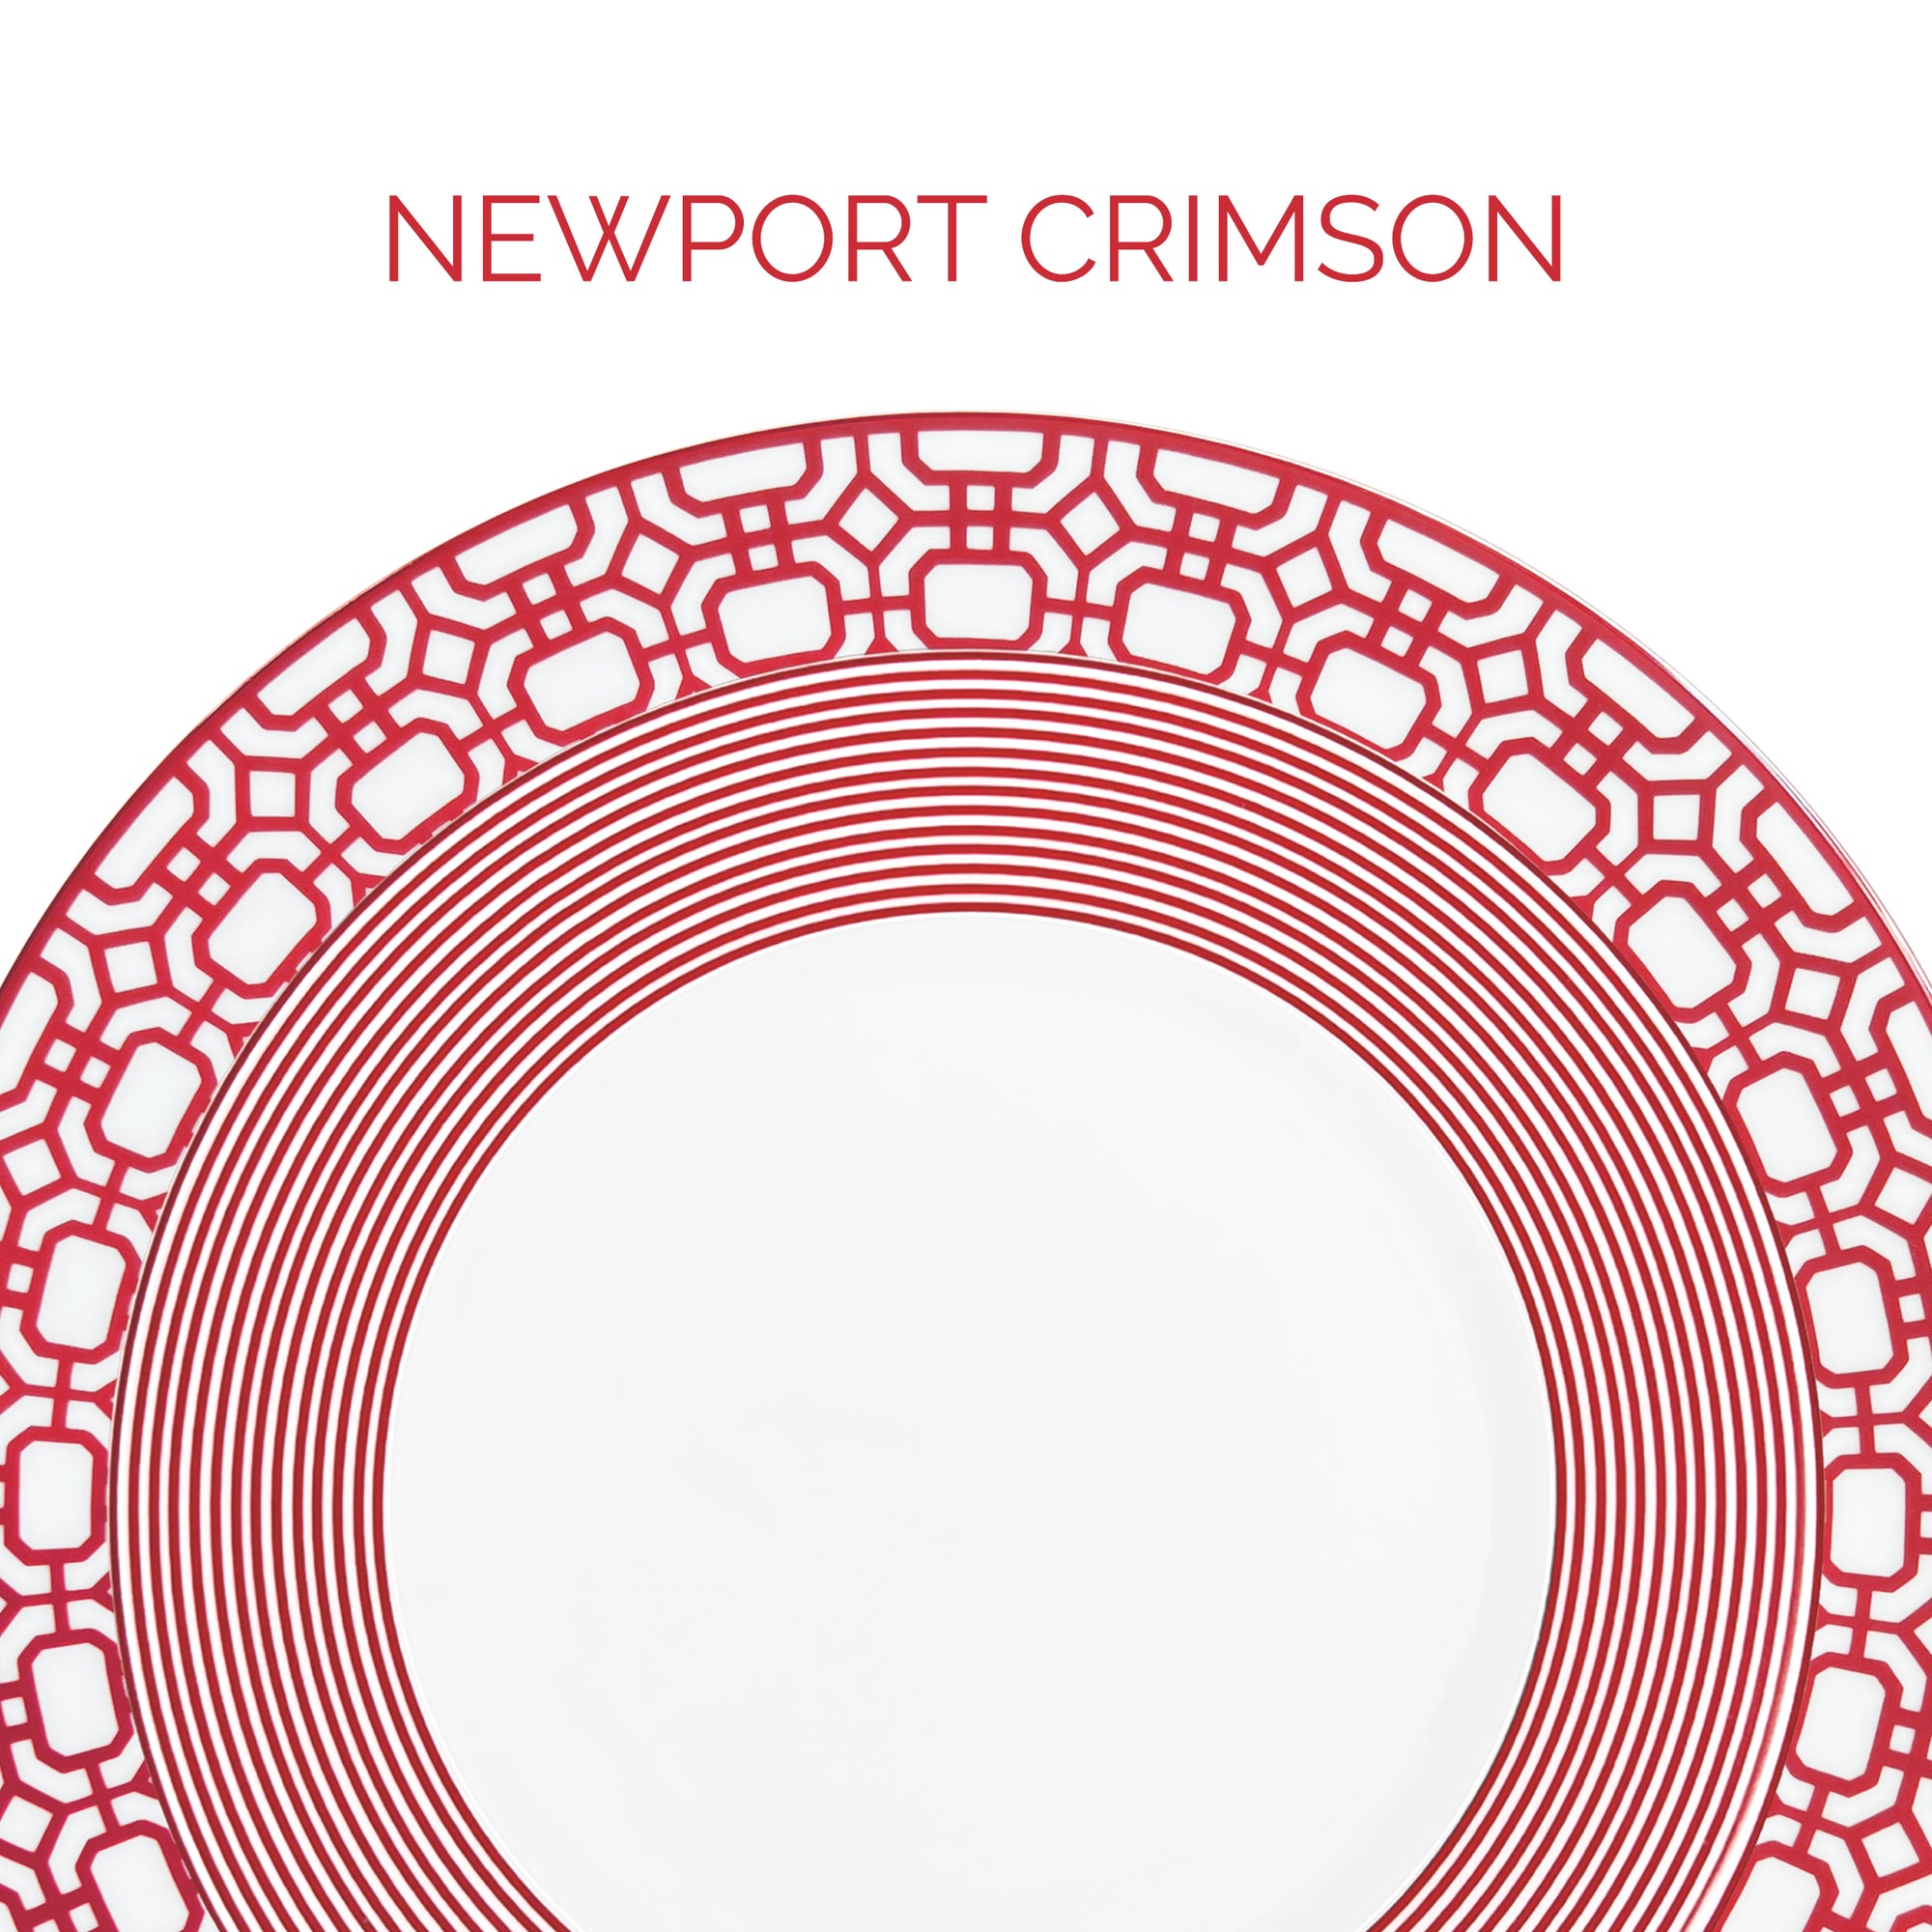 Newport Crimson